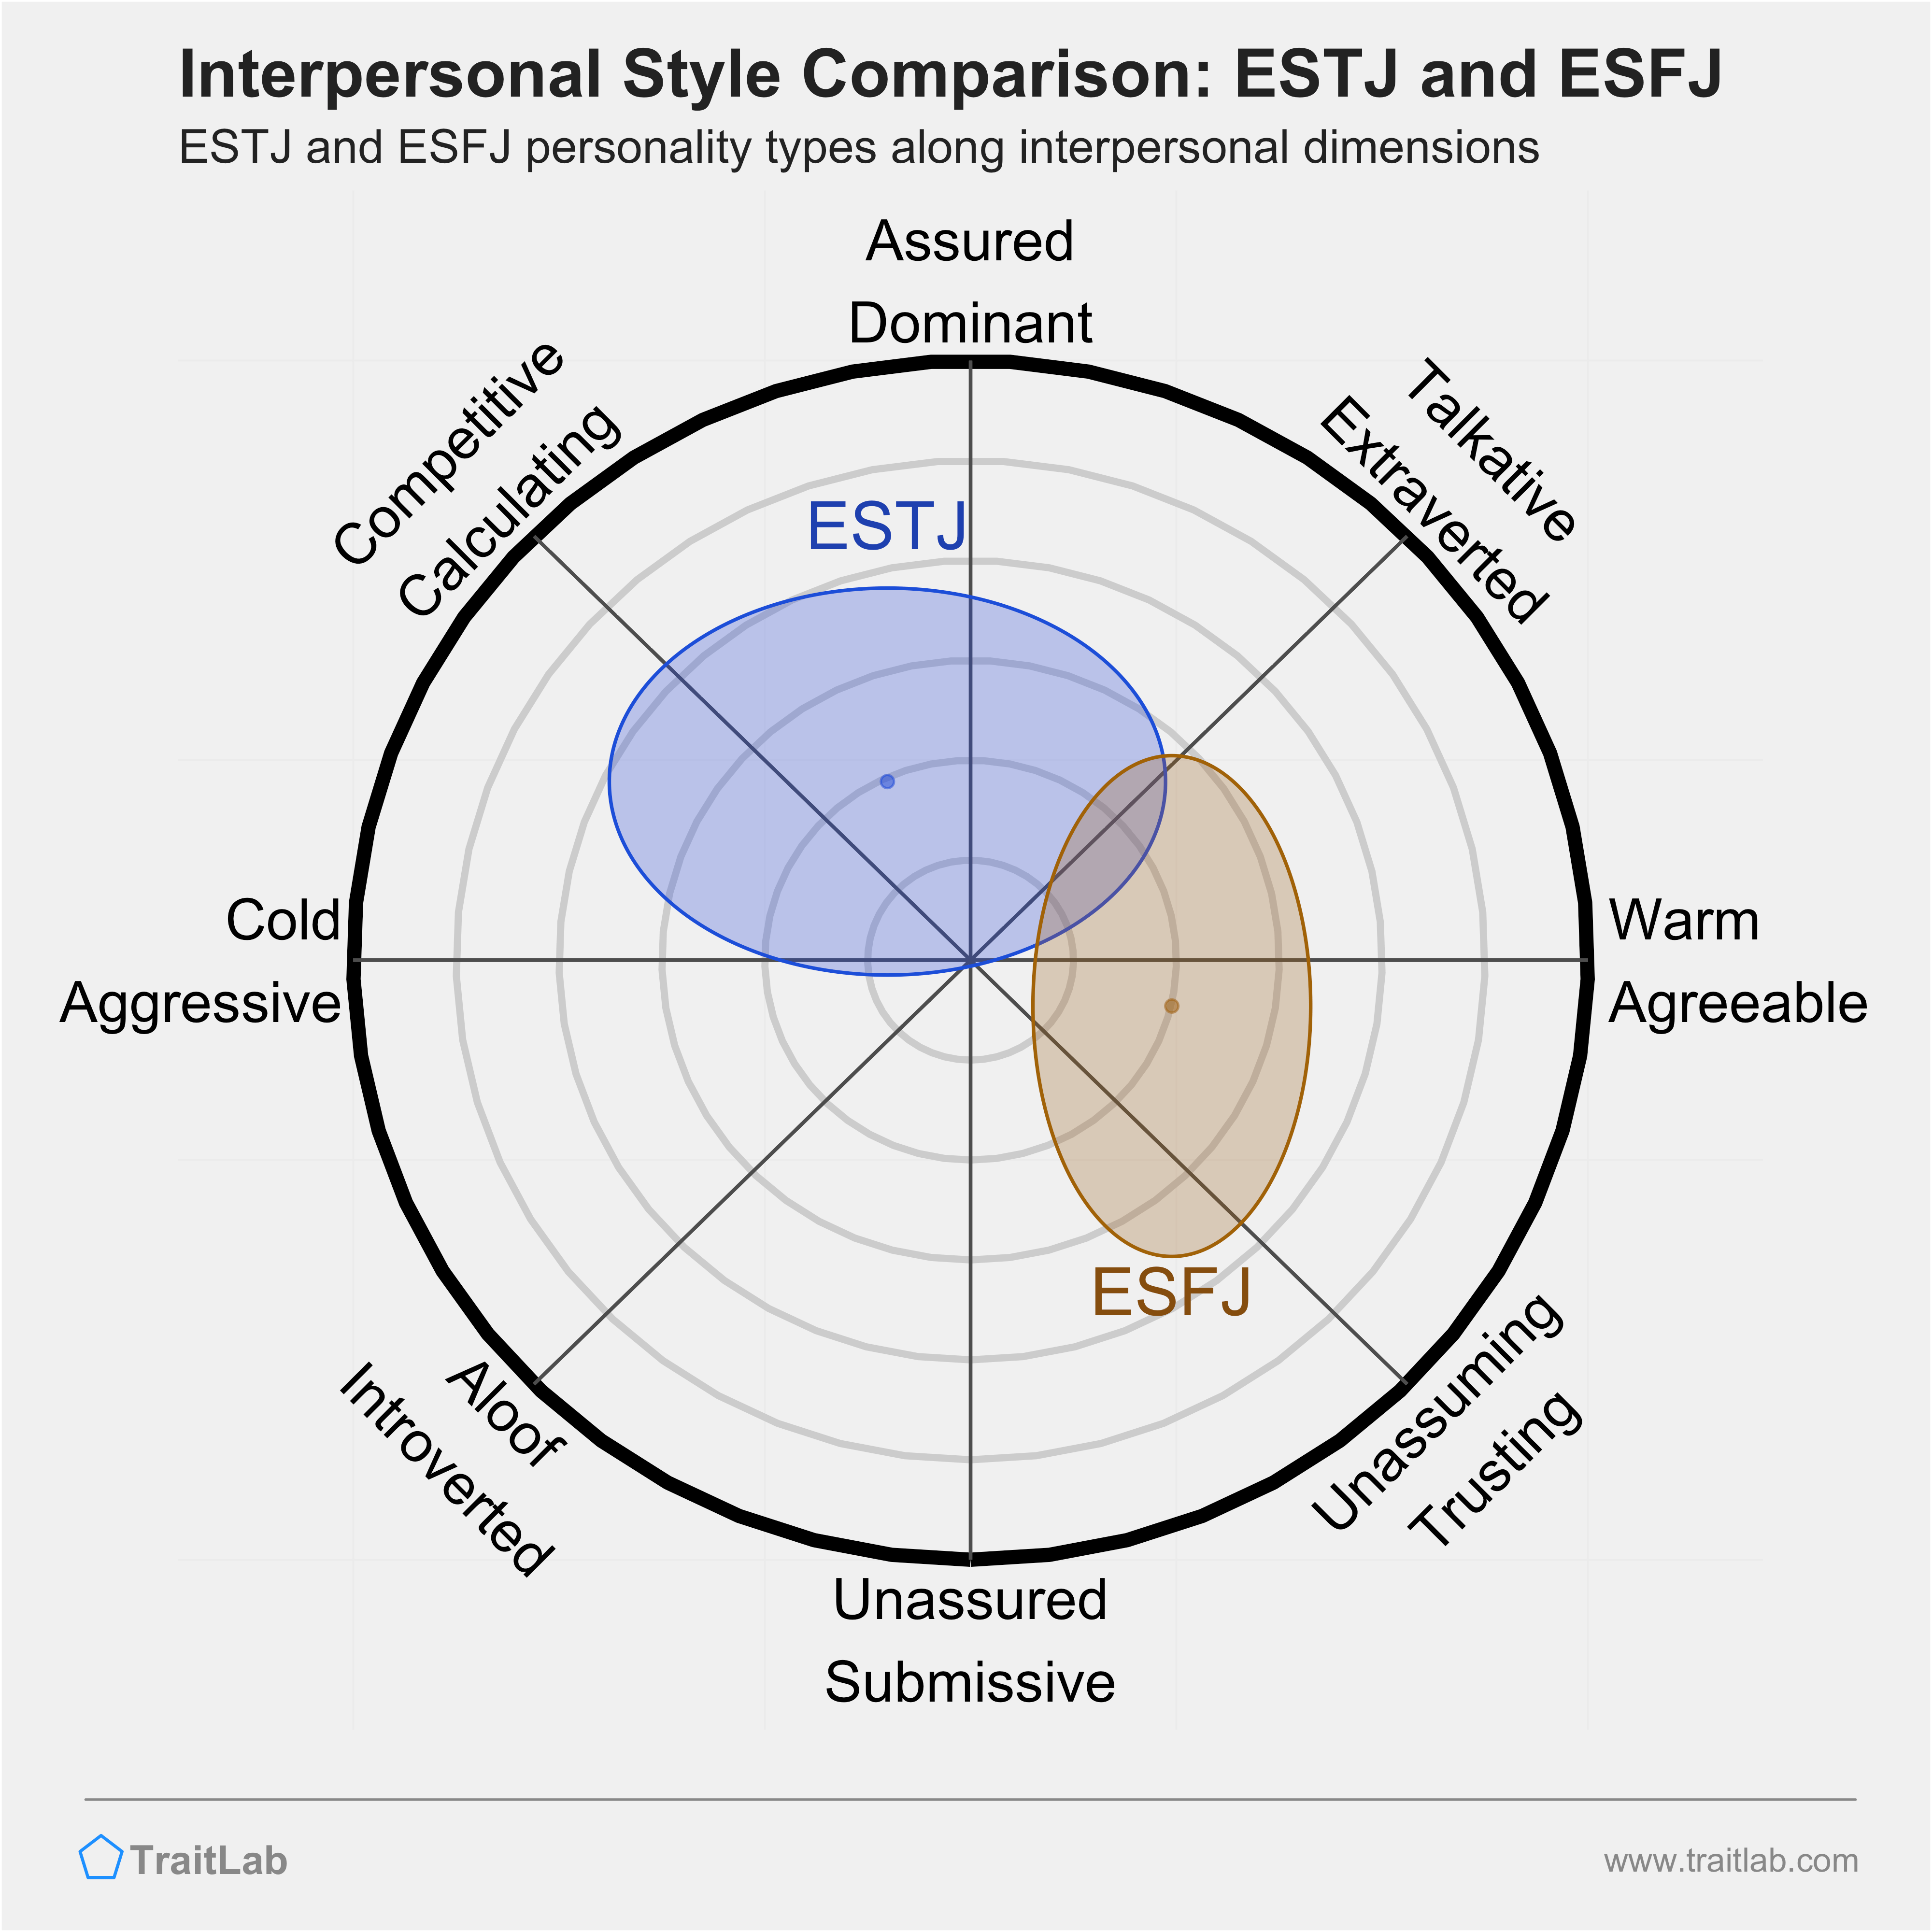 ESTJ and ESFJ comparison across interpersonal dimensions